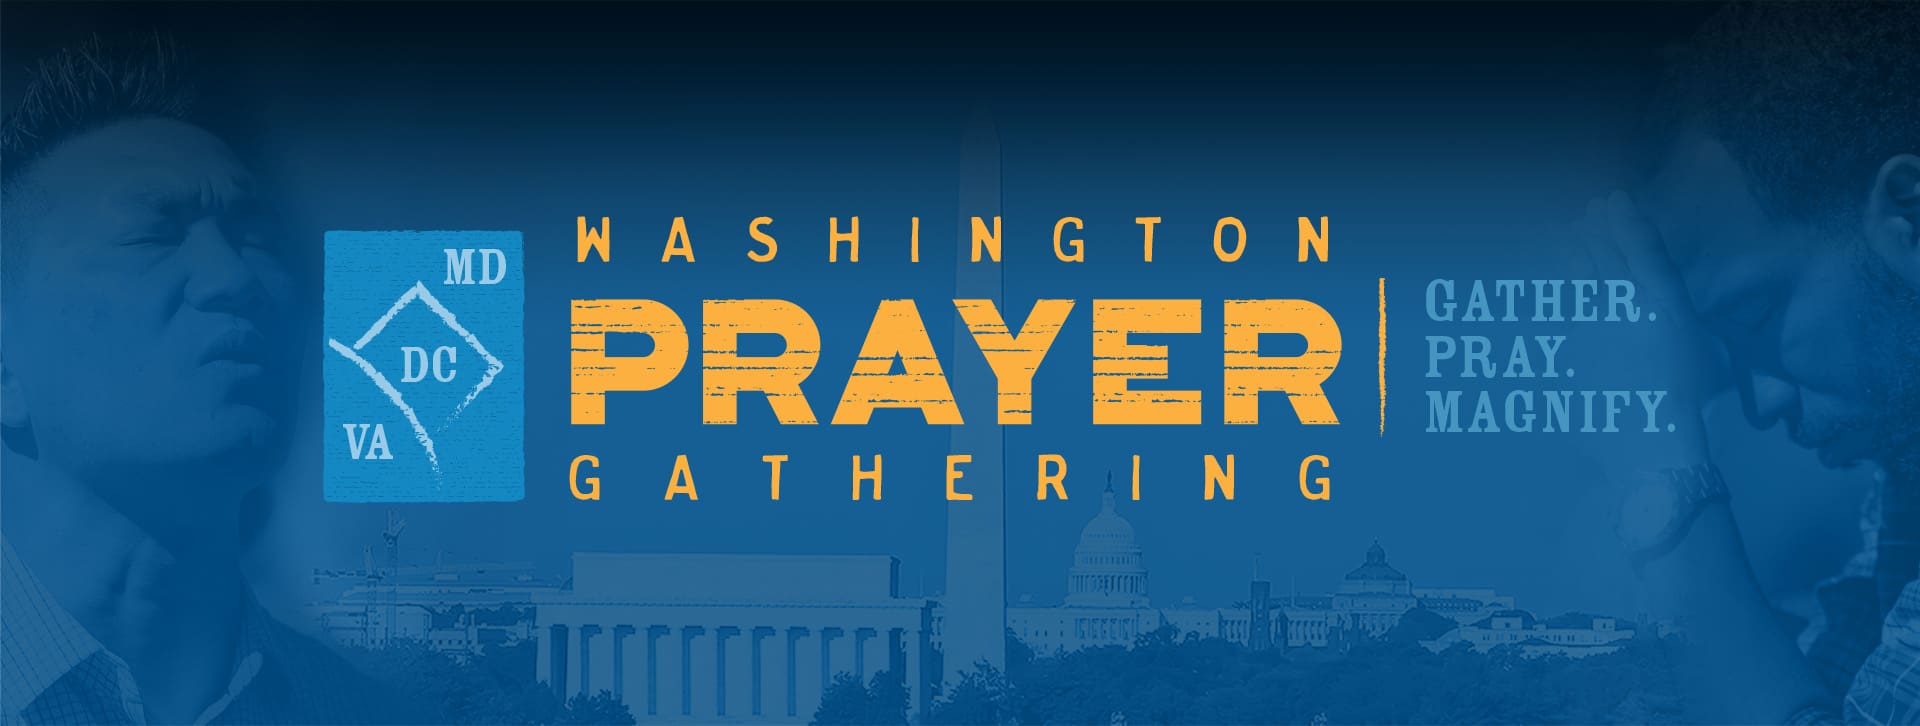 Washington prayer gathering 2018